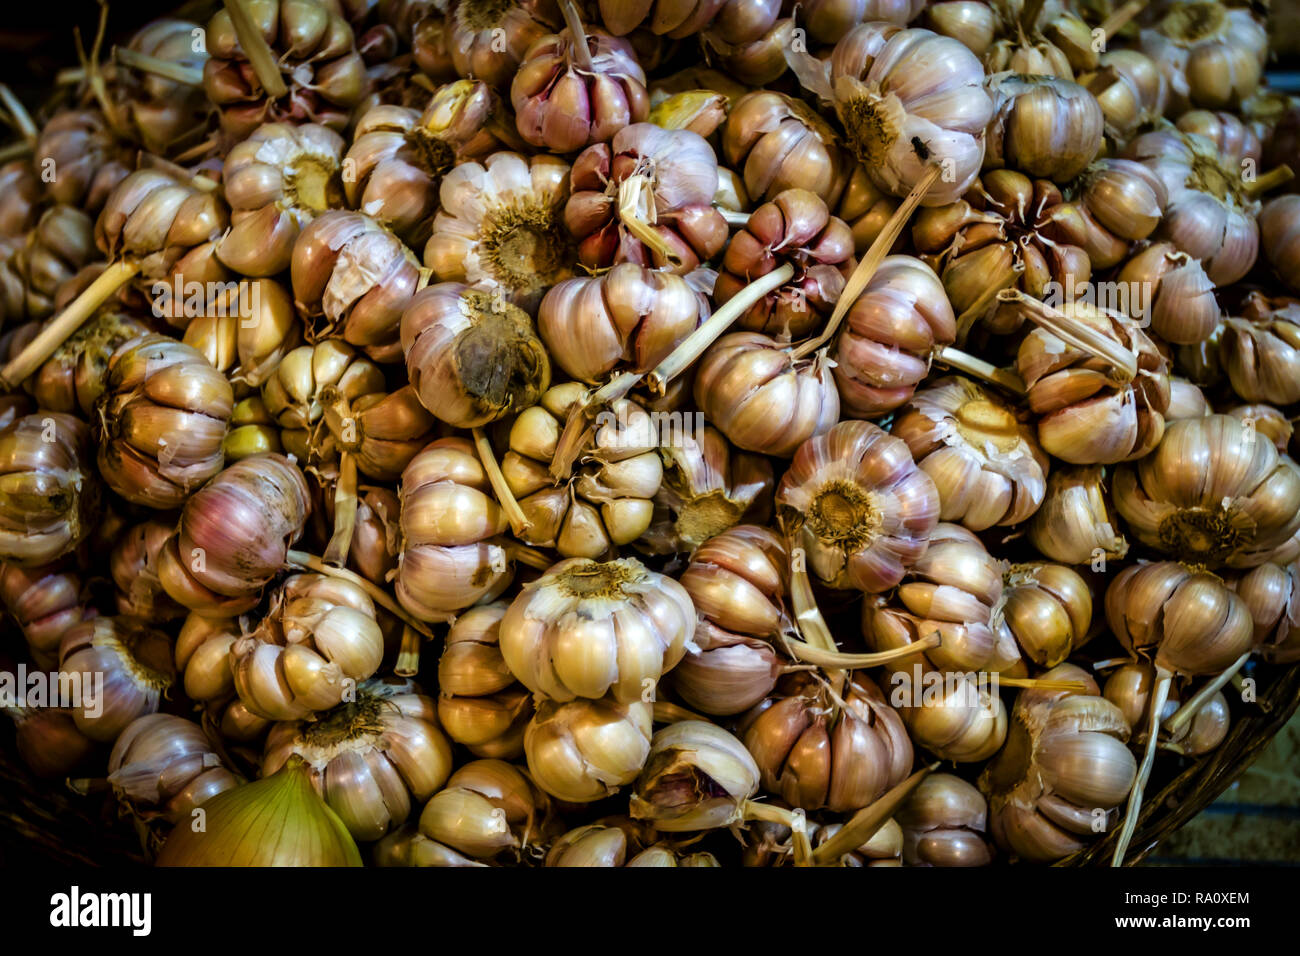 Market basket of garlic bulbs Stock Photo